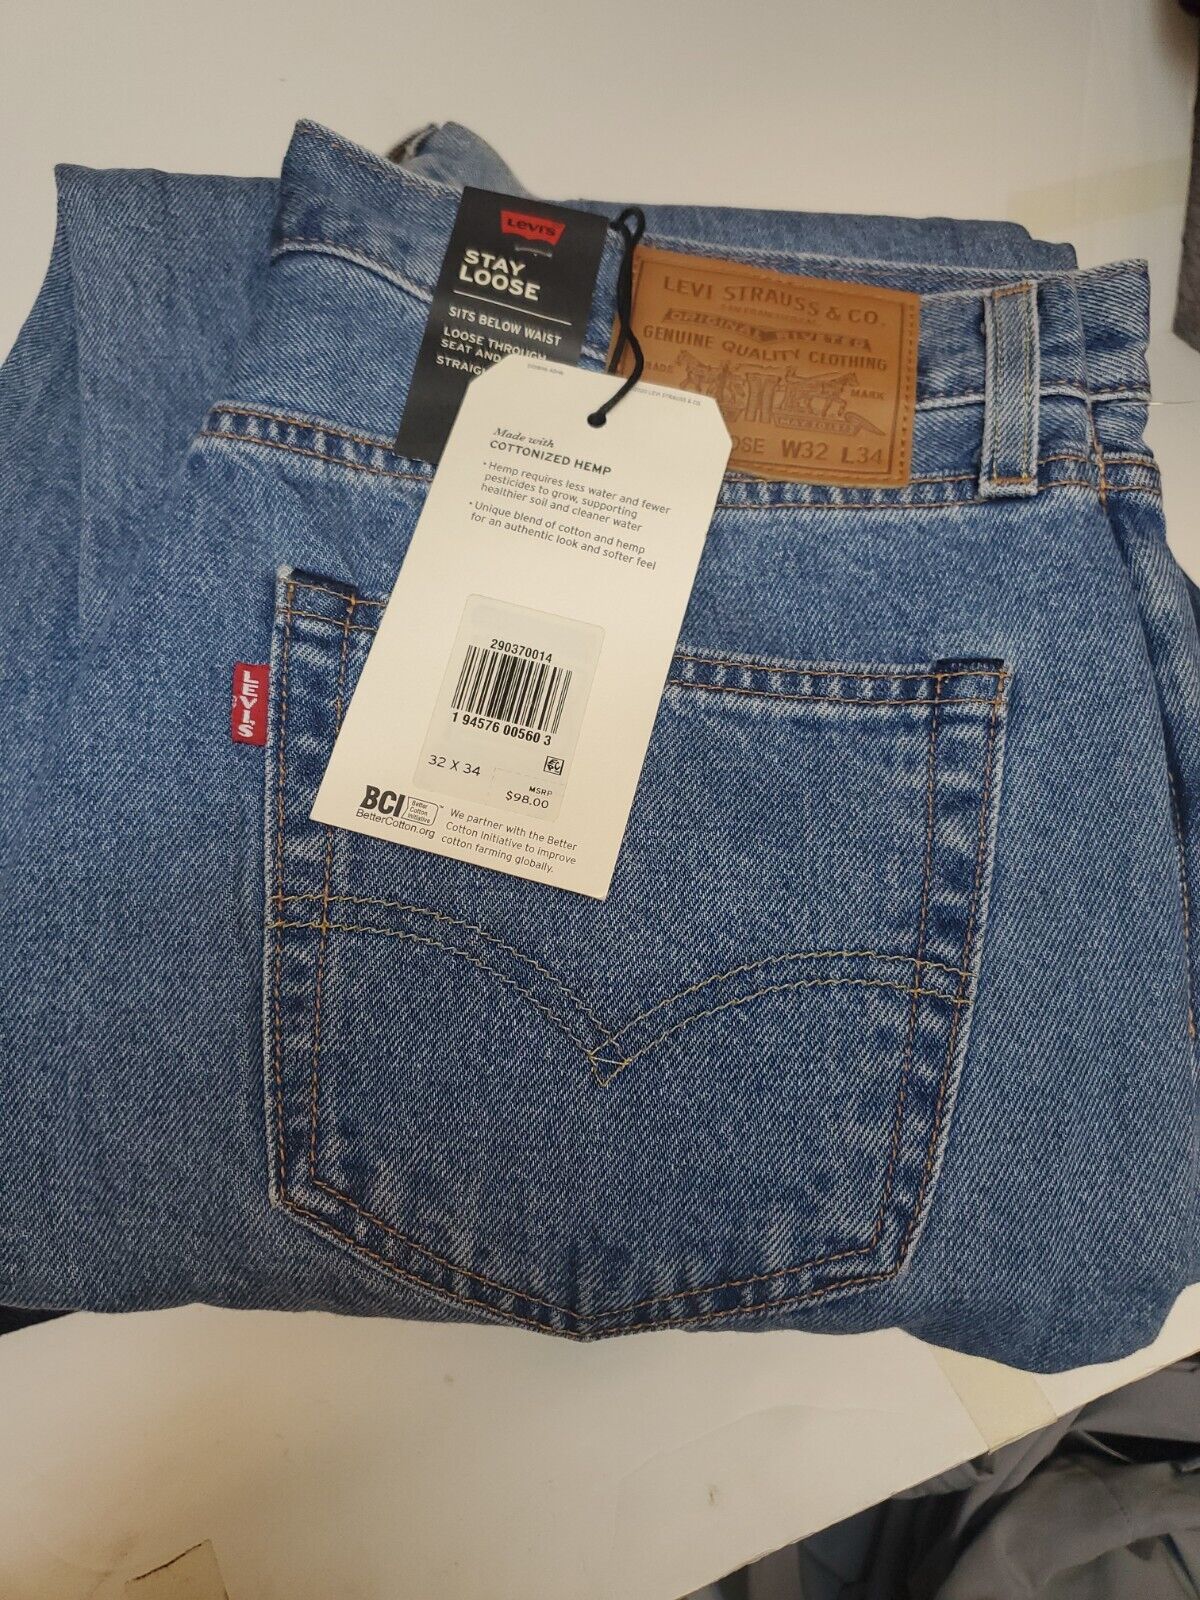 Levi's Premium Stay Loose Premium Jeans Hang Loose Blue Denim $98 Mens  32X34 194576005603 | eBay